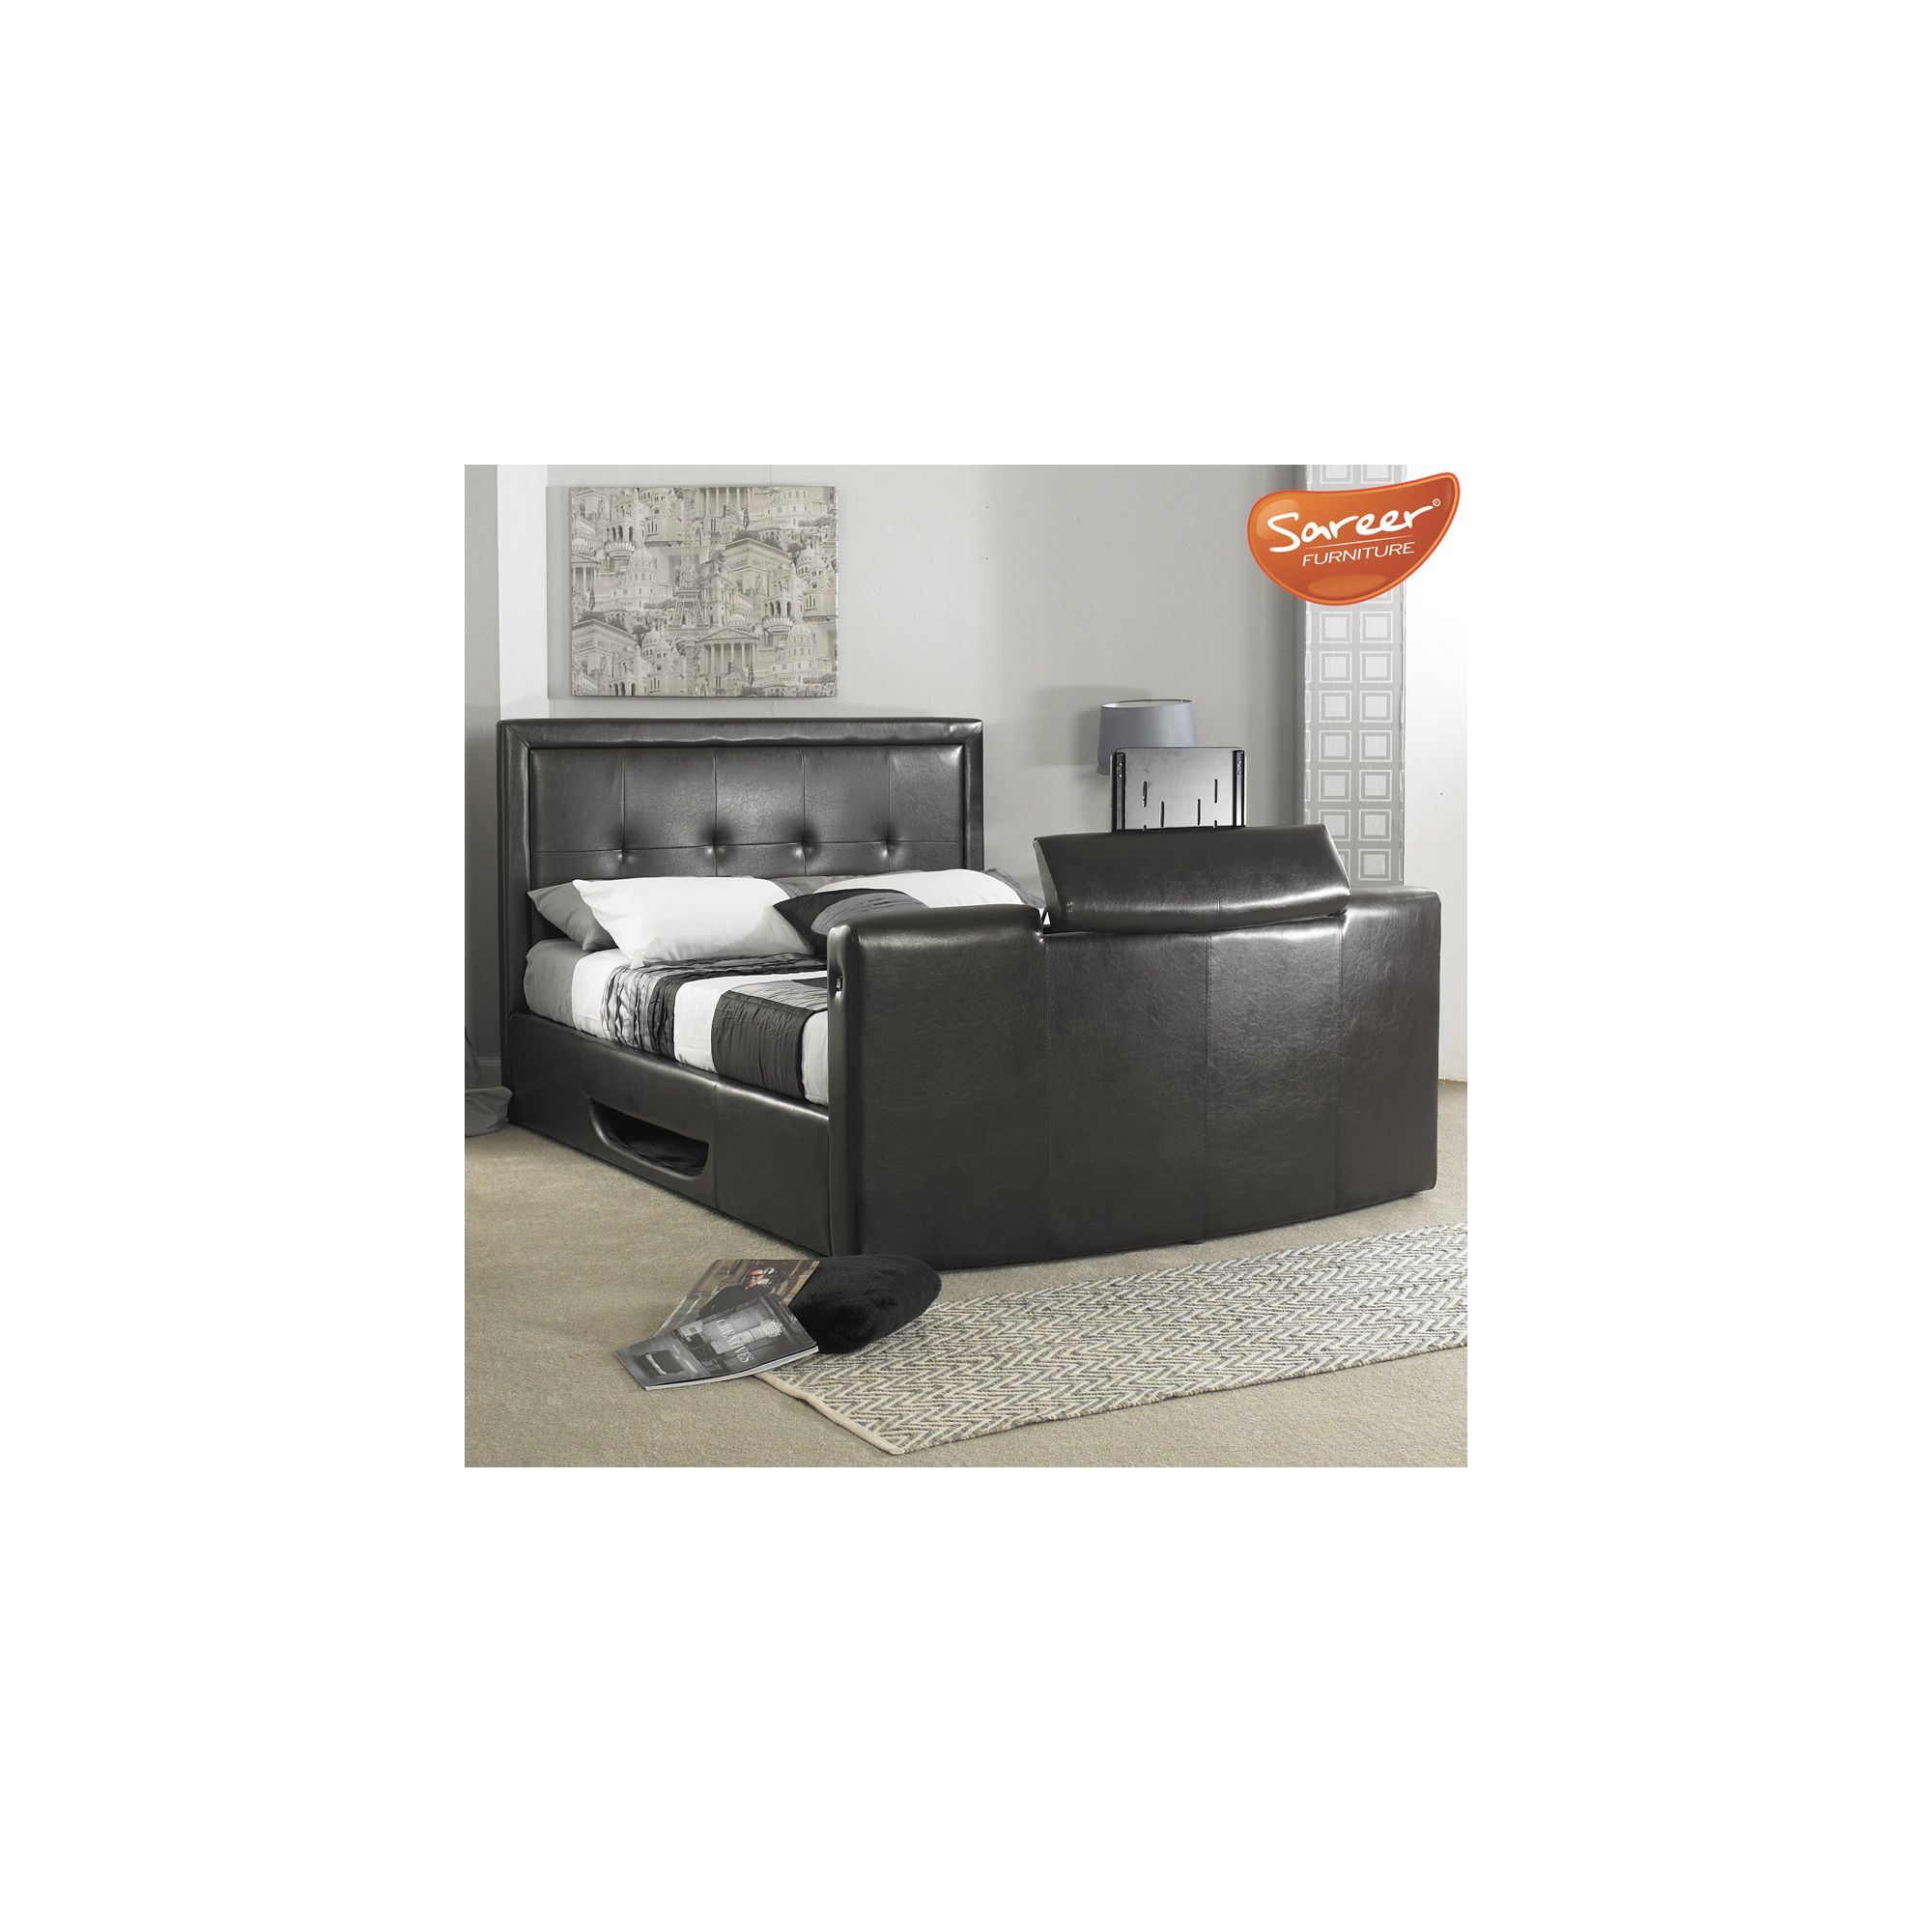 Sareer Furniture Royale TV Bed - King at Tesco Direct